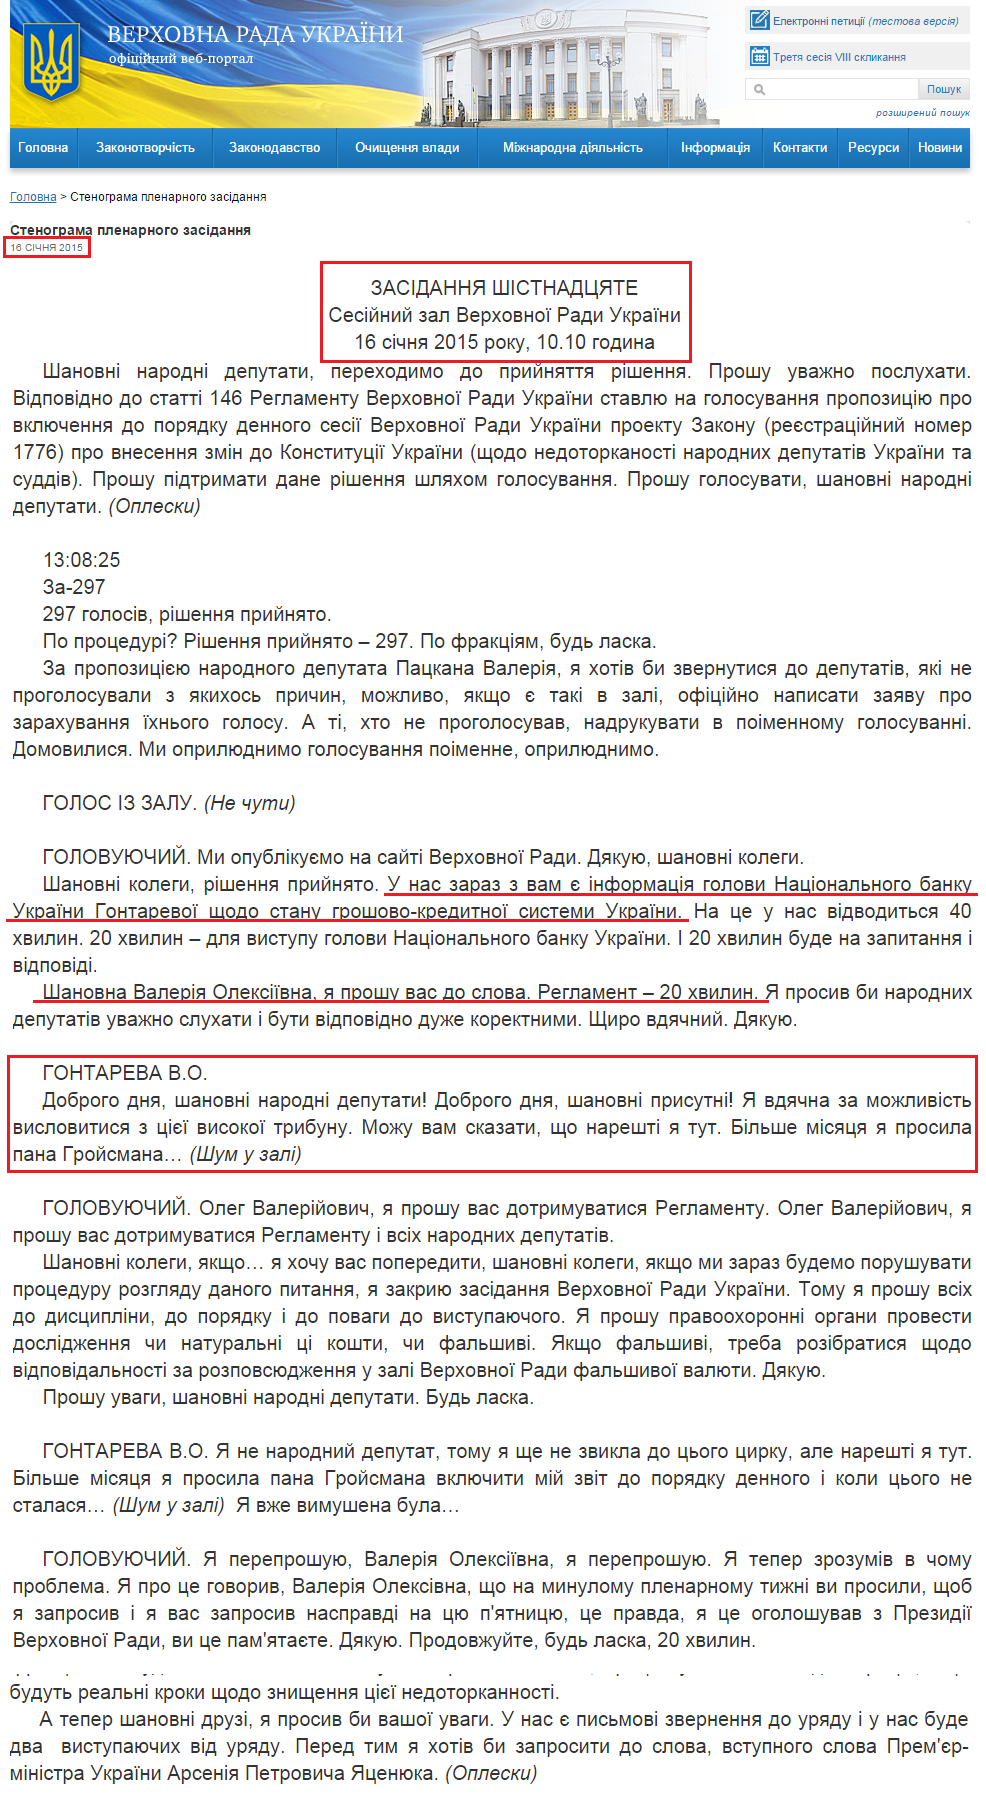 http://iportal.rada.gov.ua/meeting/stenogr/show/5767.html